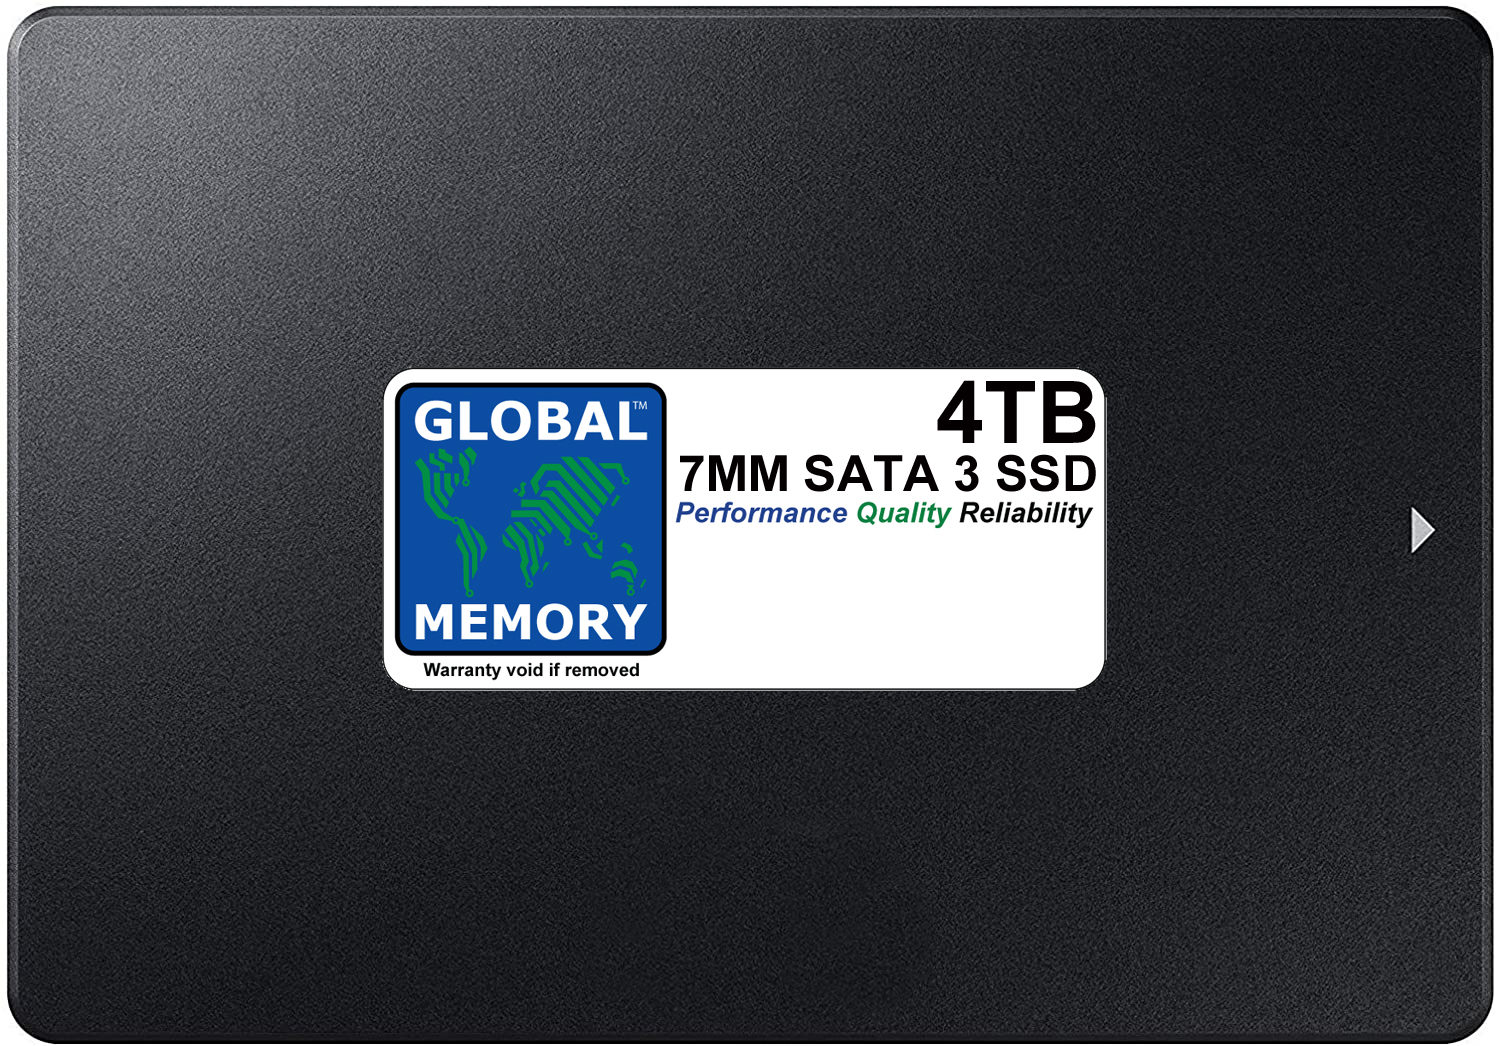 4TB 7mm 2.5" SATA 3 SSD FOR LAPTOPS / DESKTOP PCs / SERVERS / WORKSTATIONS